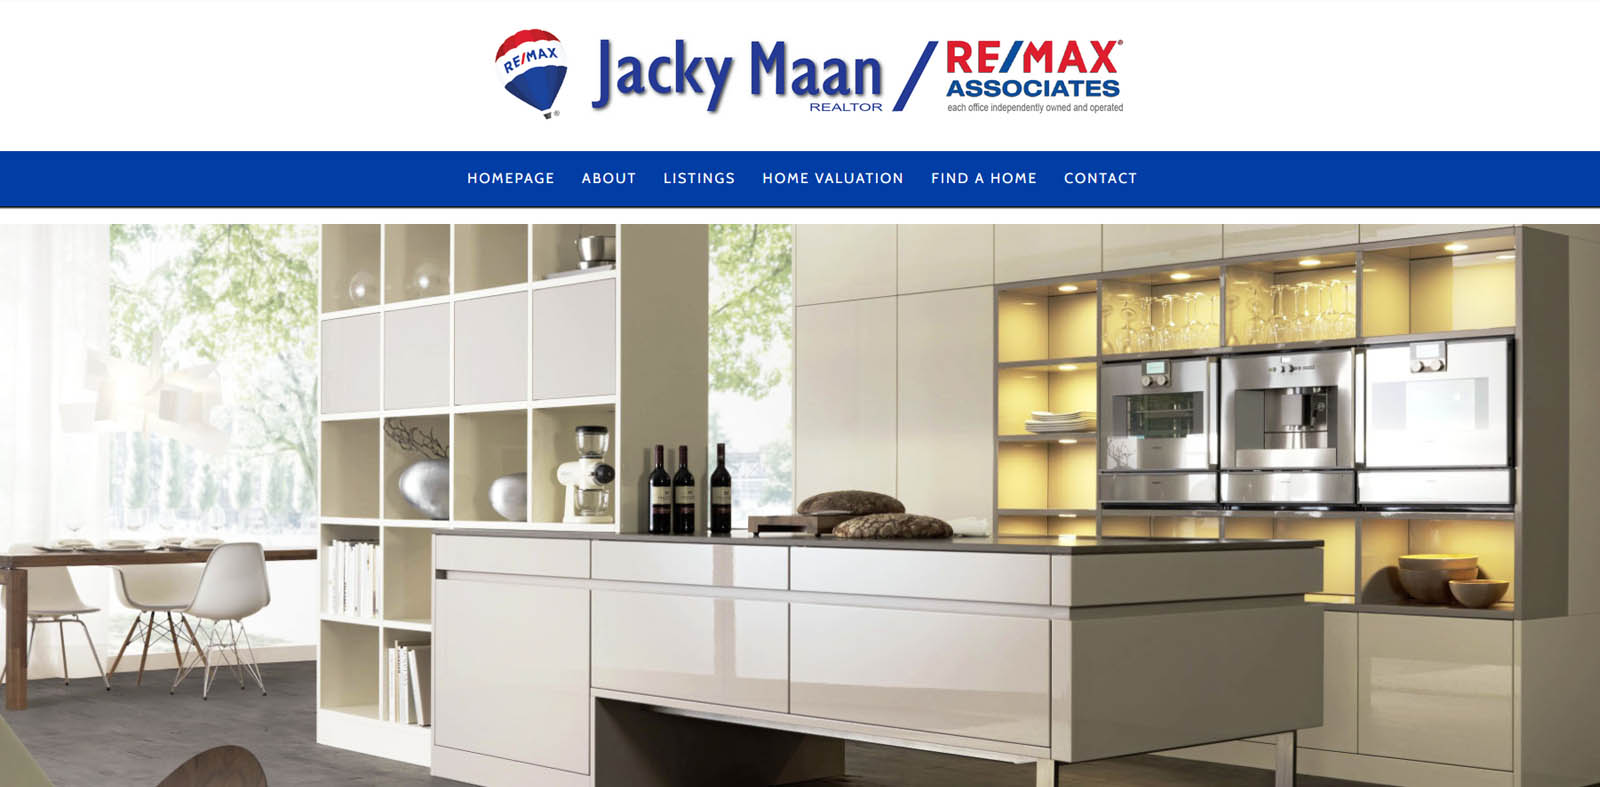 Jacky Maan Real Estate